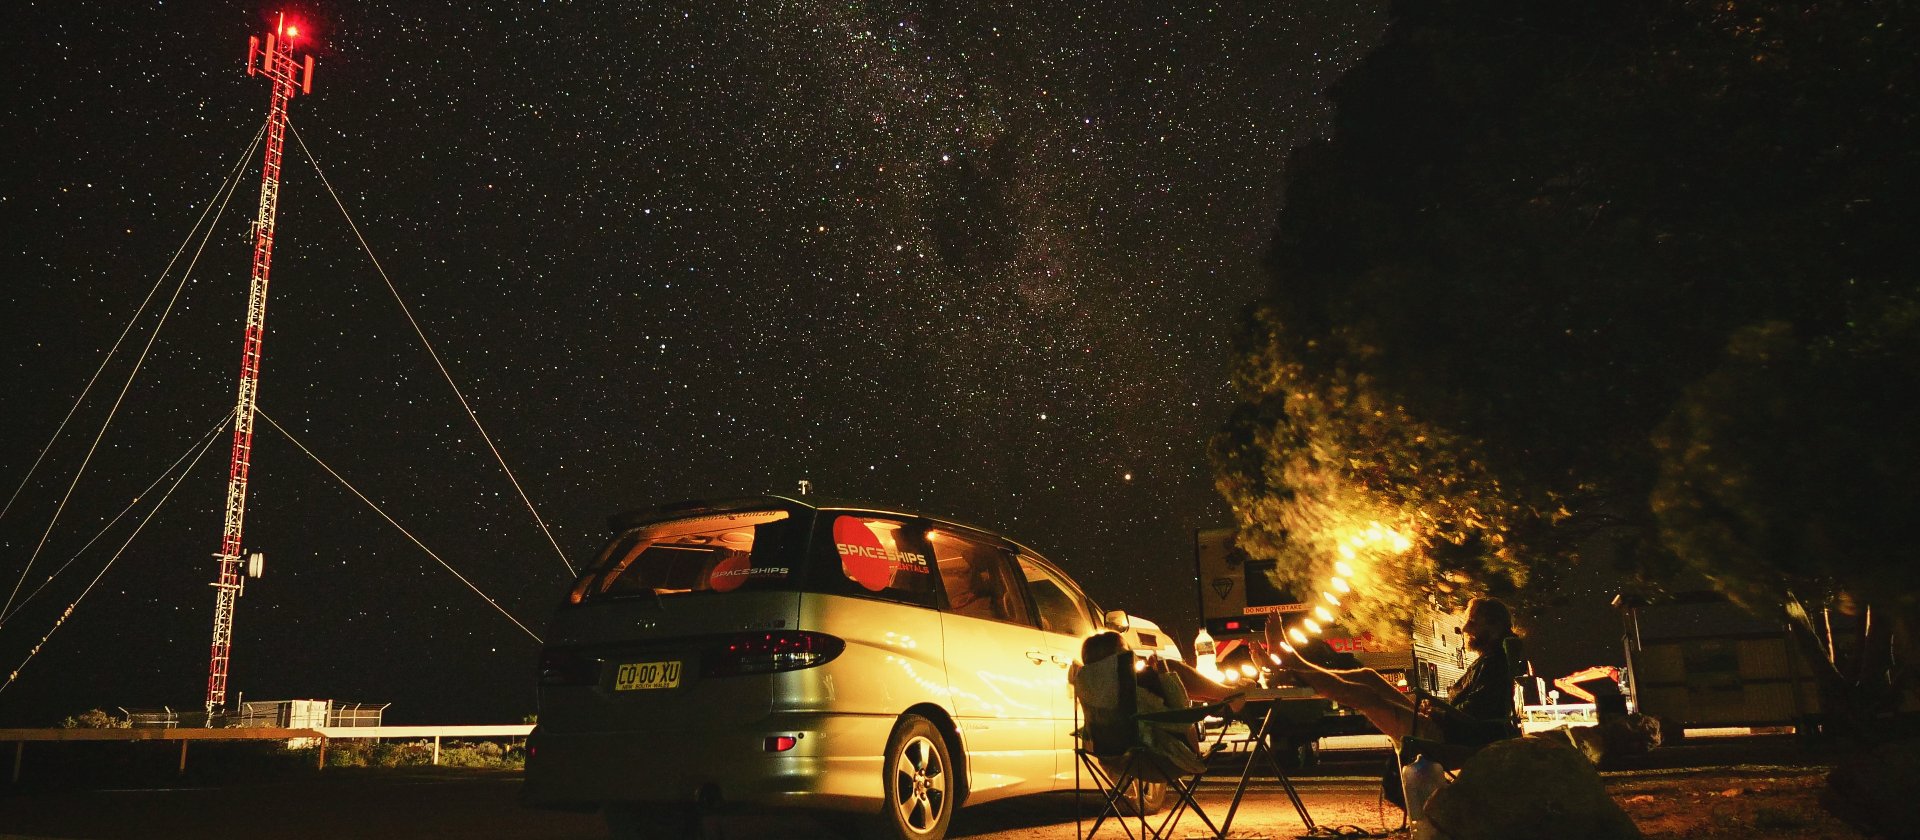 Experience the Aussie night sky